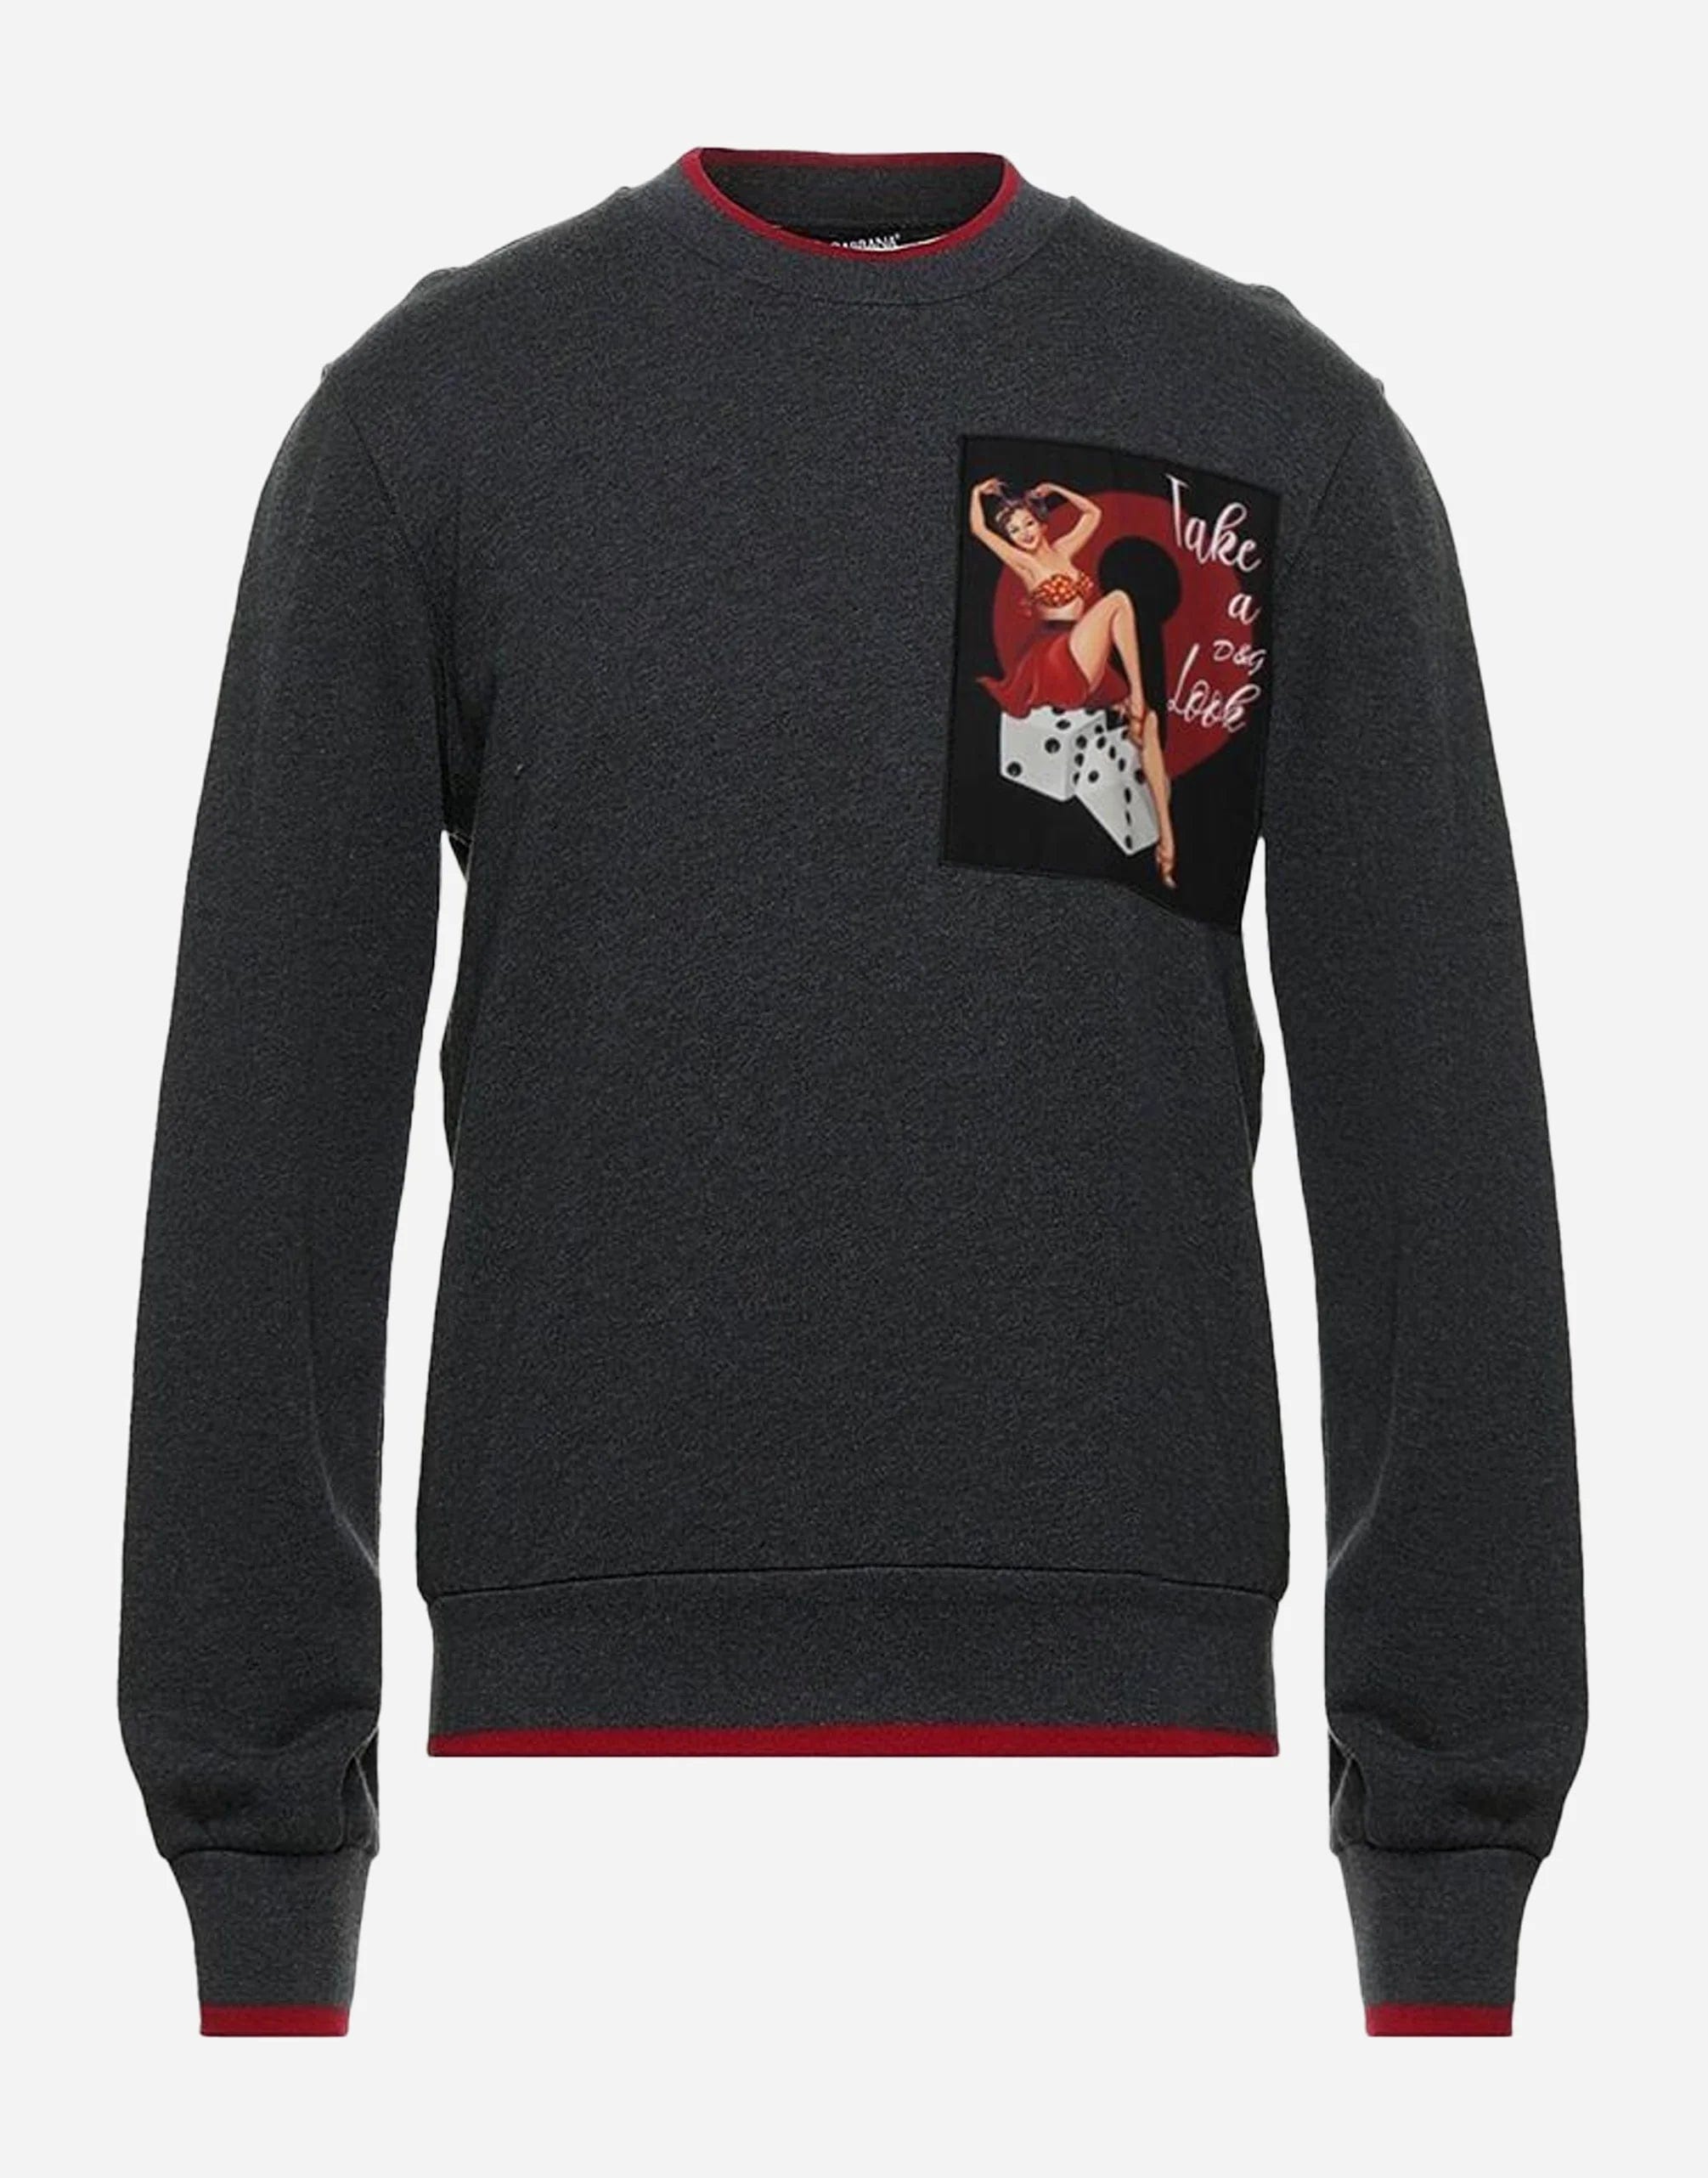 Dolce & Gabbana 'Take A DG Look' Crewneck Sweatshirt